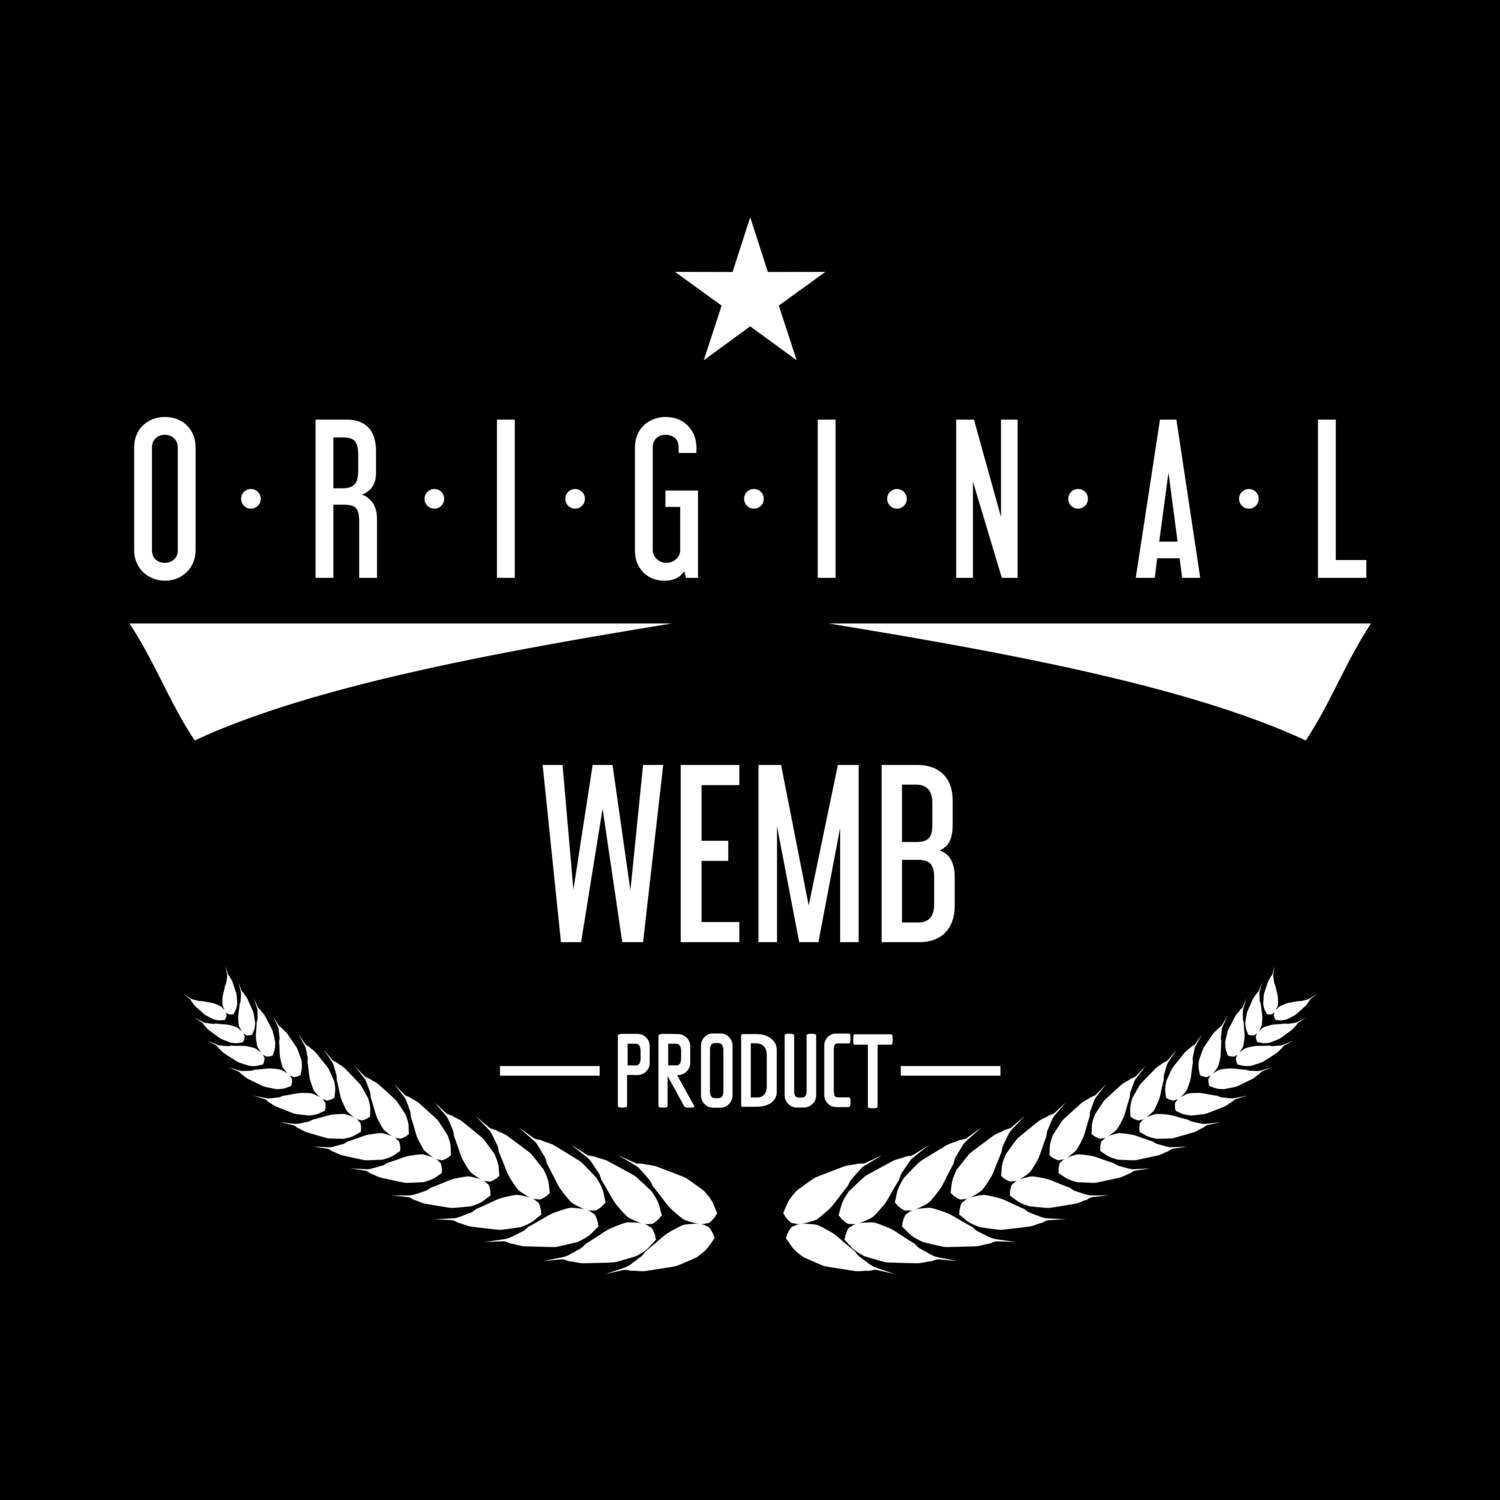 Wemb T-Shirt »Original Product«